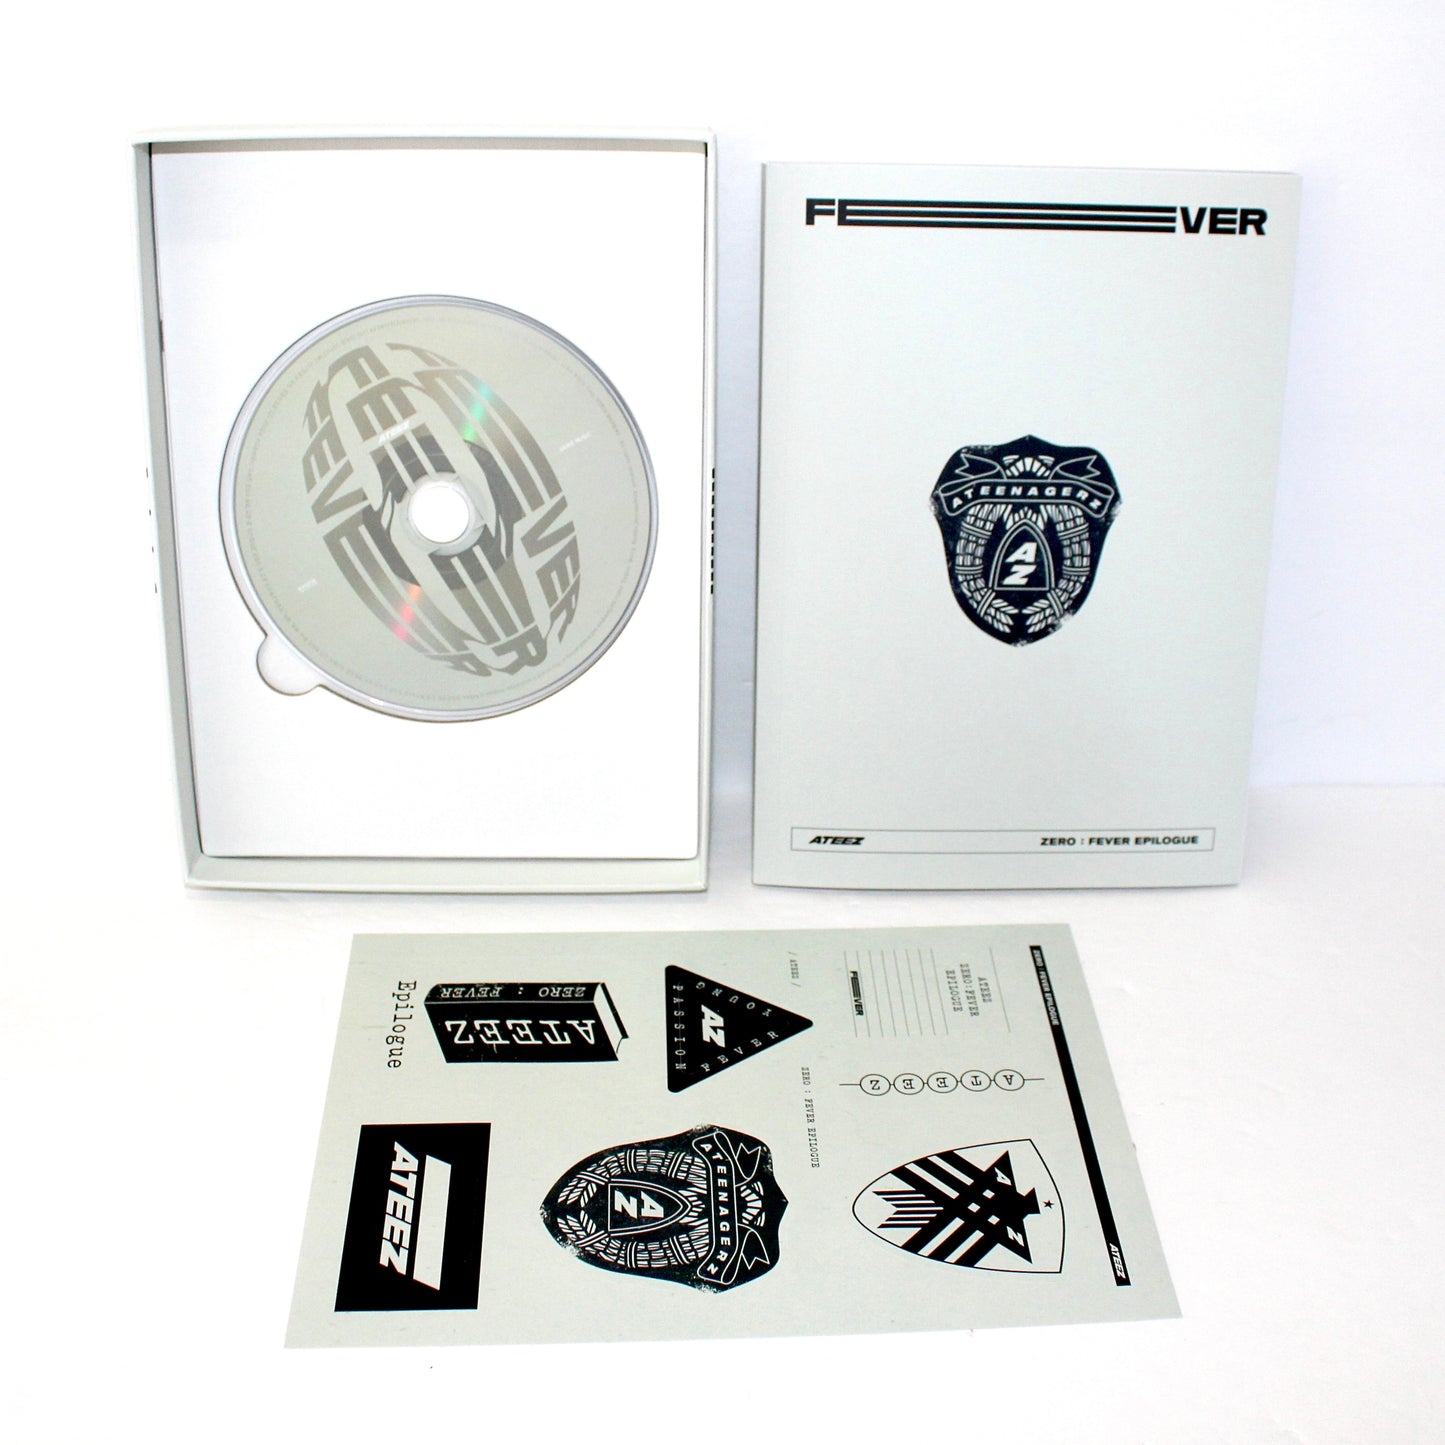 ATEEZ 8th Mini Album - ZERO: FEVER Epilogue | A ver.